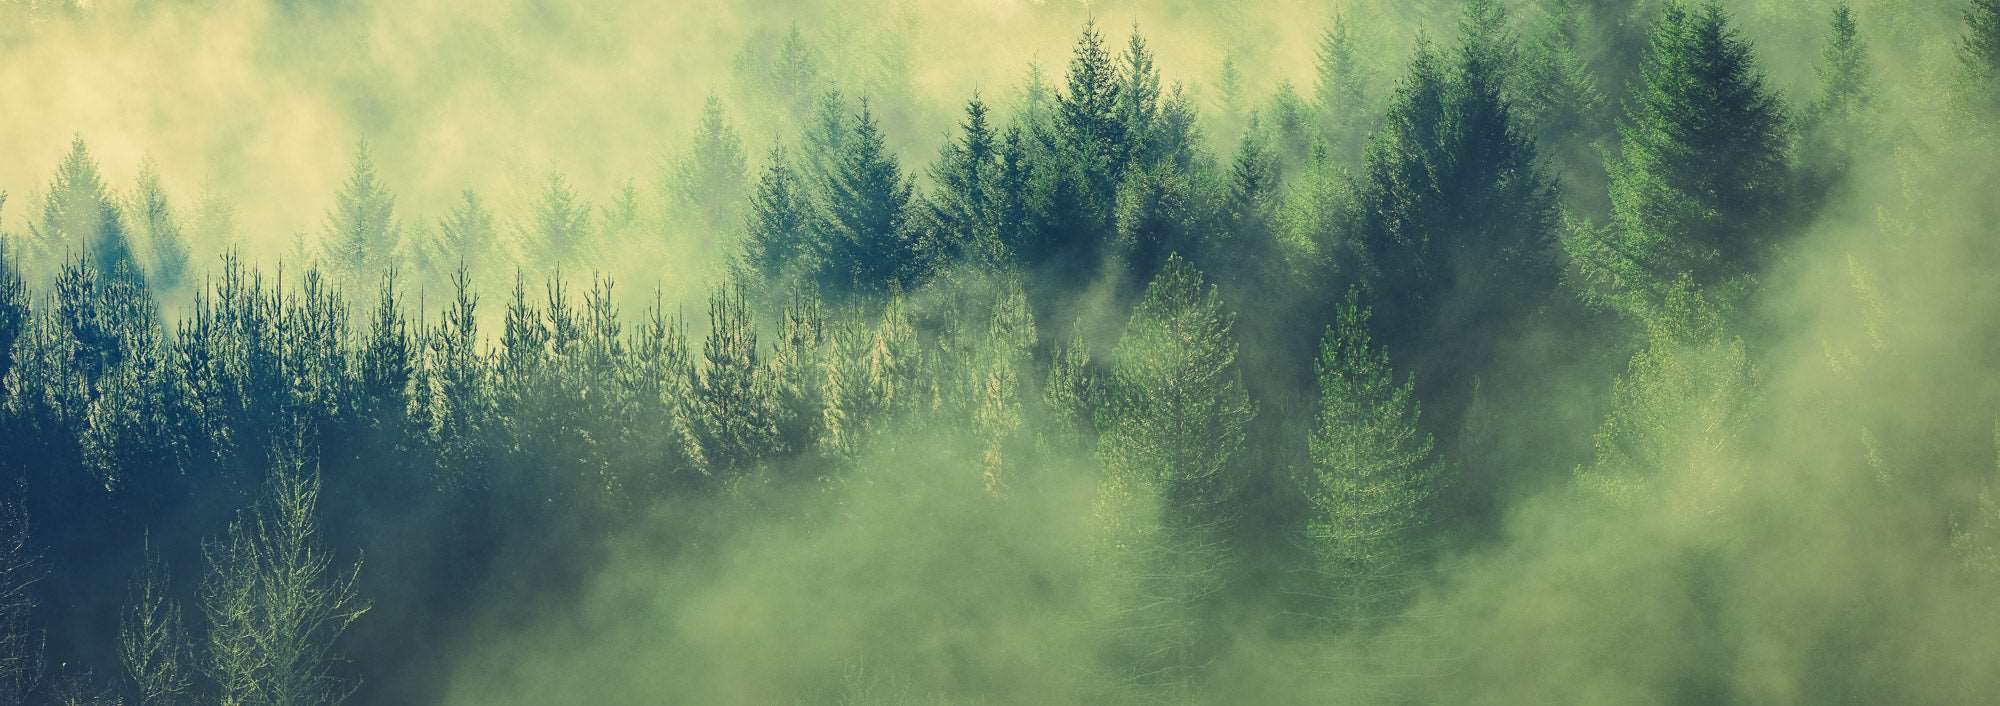 Transitions - Rotorua Redwoods - by Award Winning New Zealand Landscape Photographer Stephen Milner